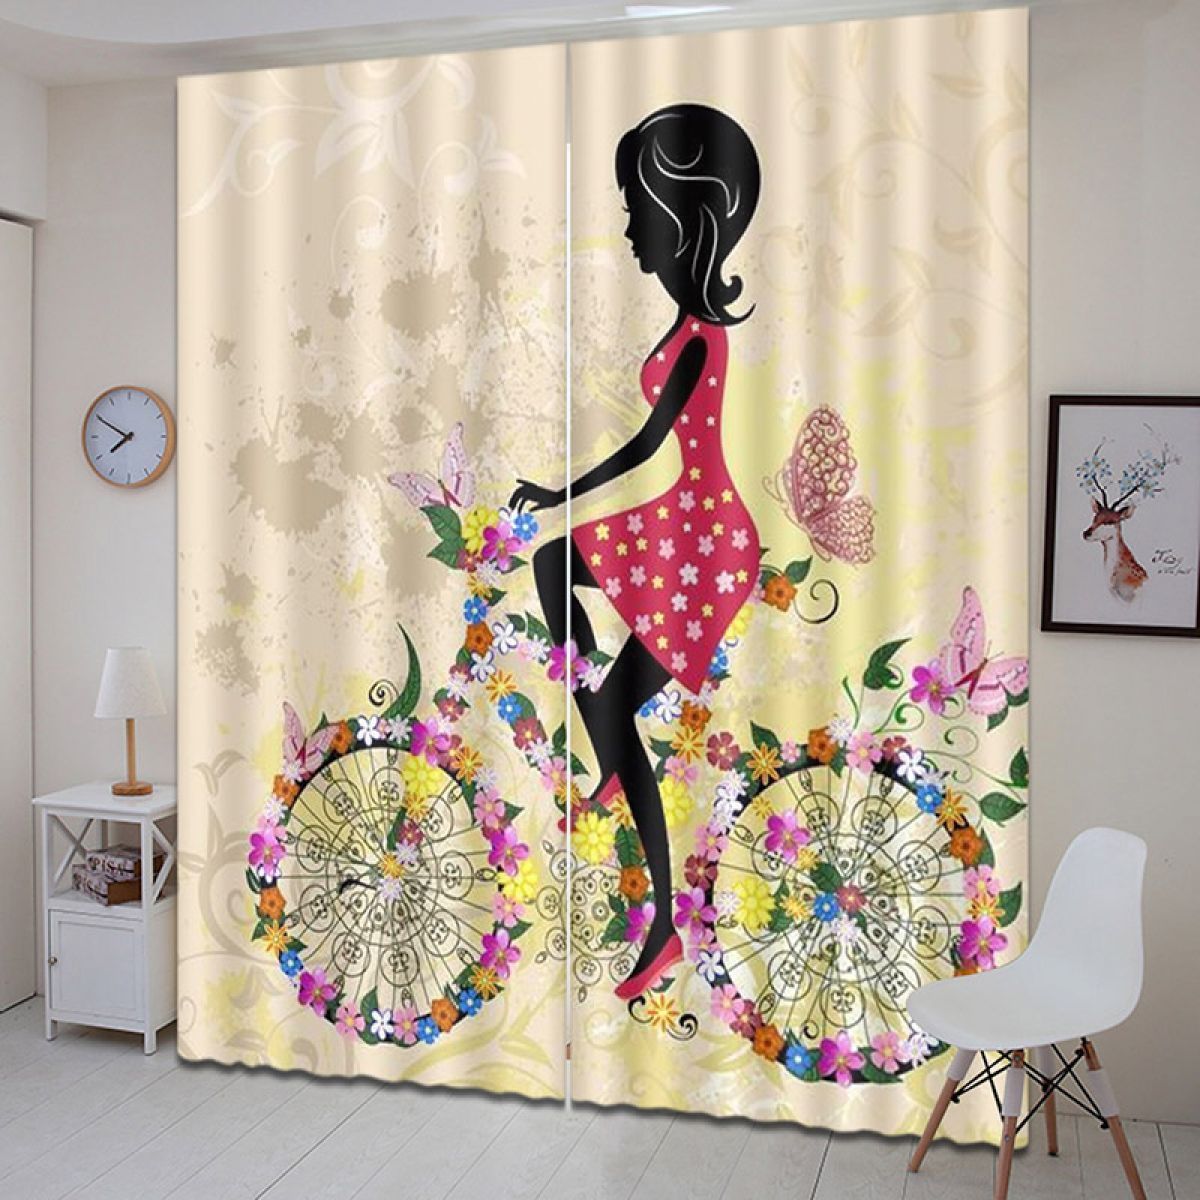 woman riding bike printed window curtain home decor 3875